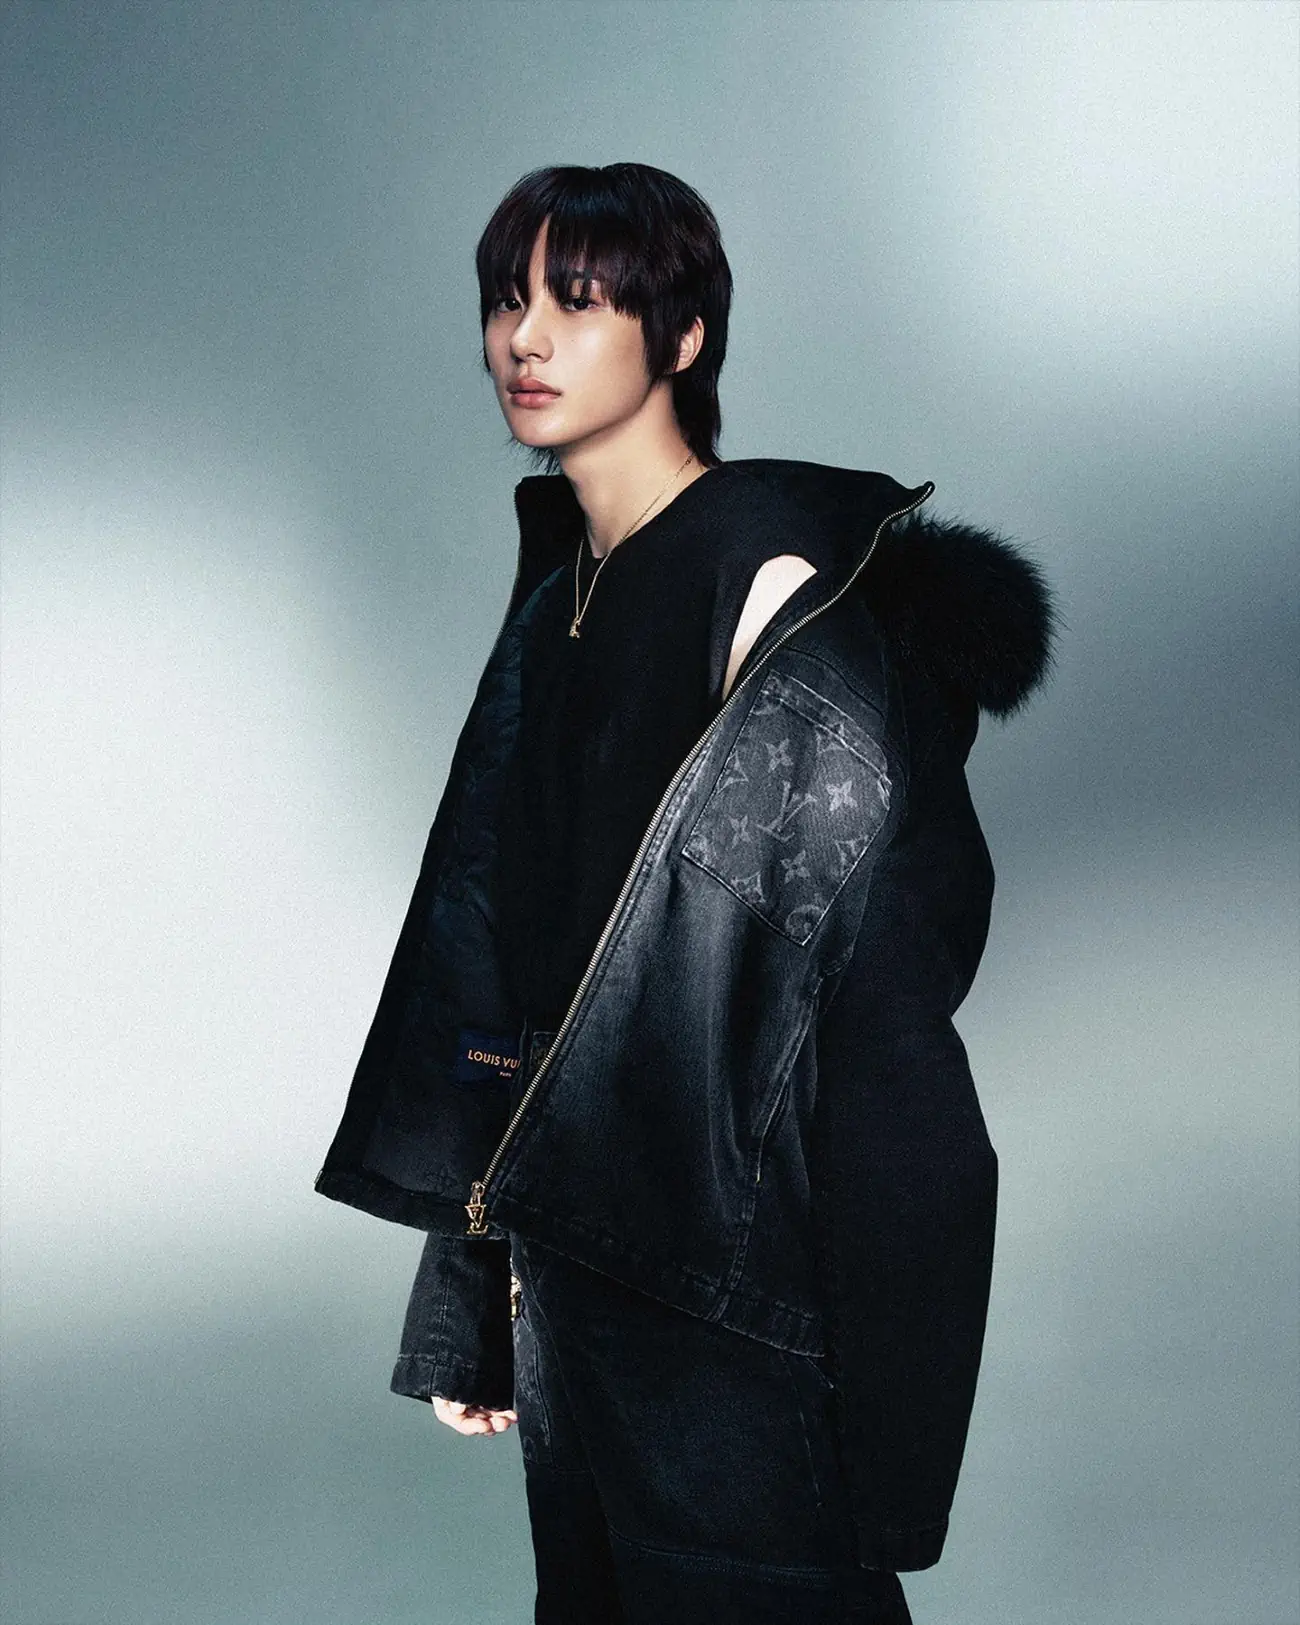 K-pop band Riize joins Louis Vuitton as its latest house ambassador